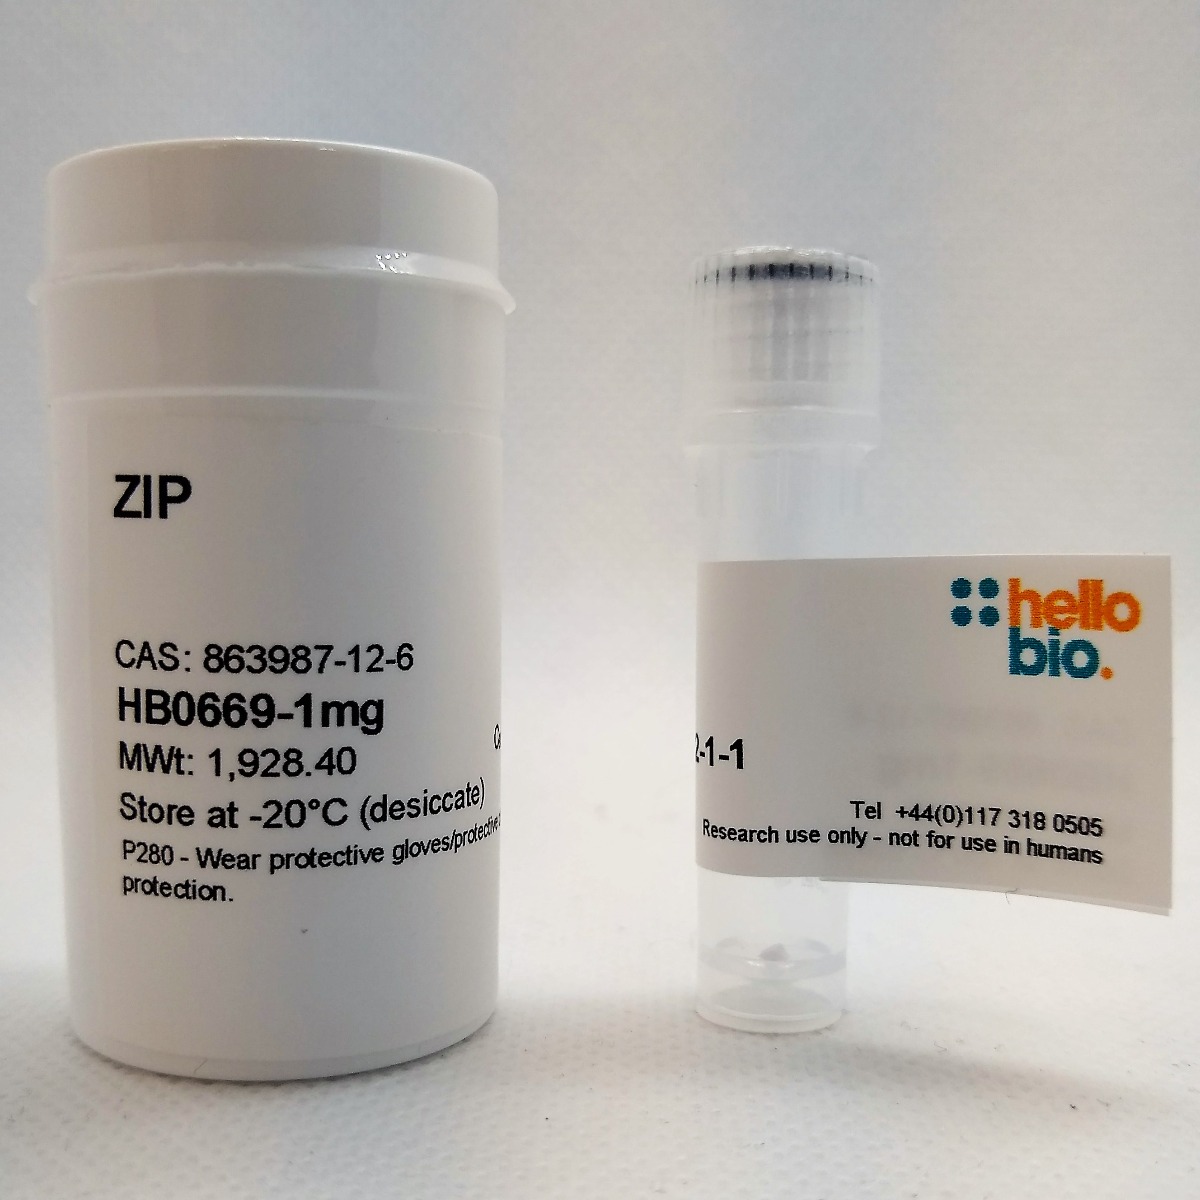 ZIP product vial image | Hello Bio